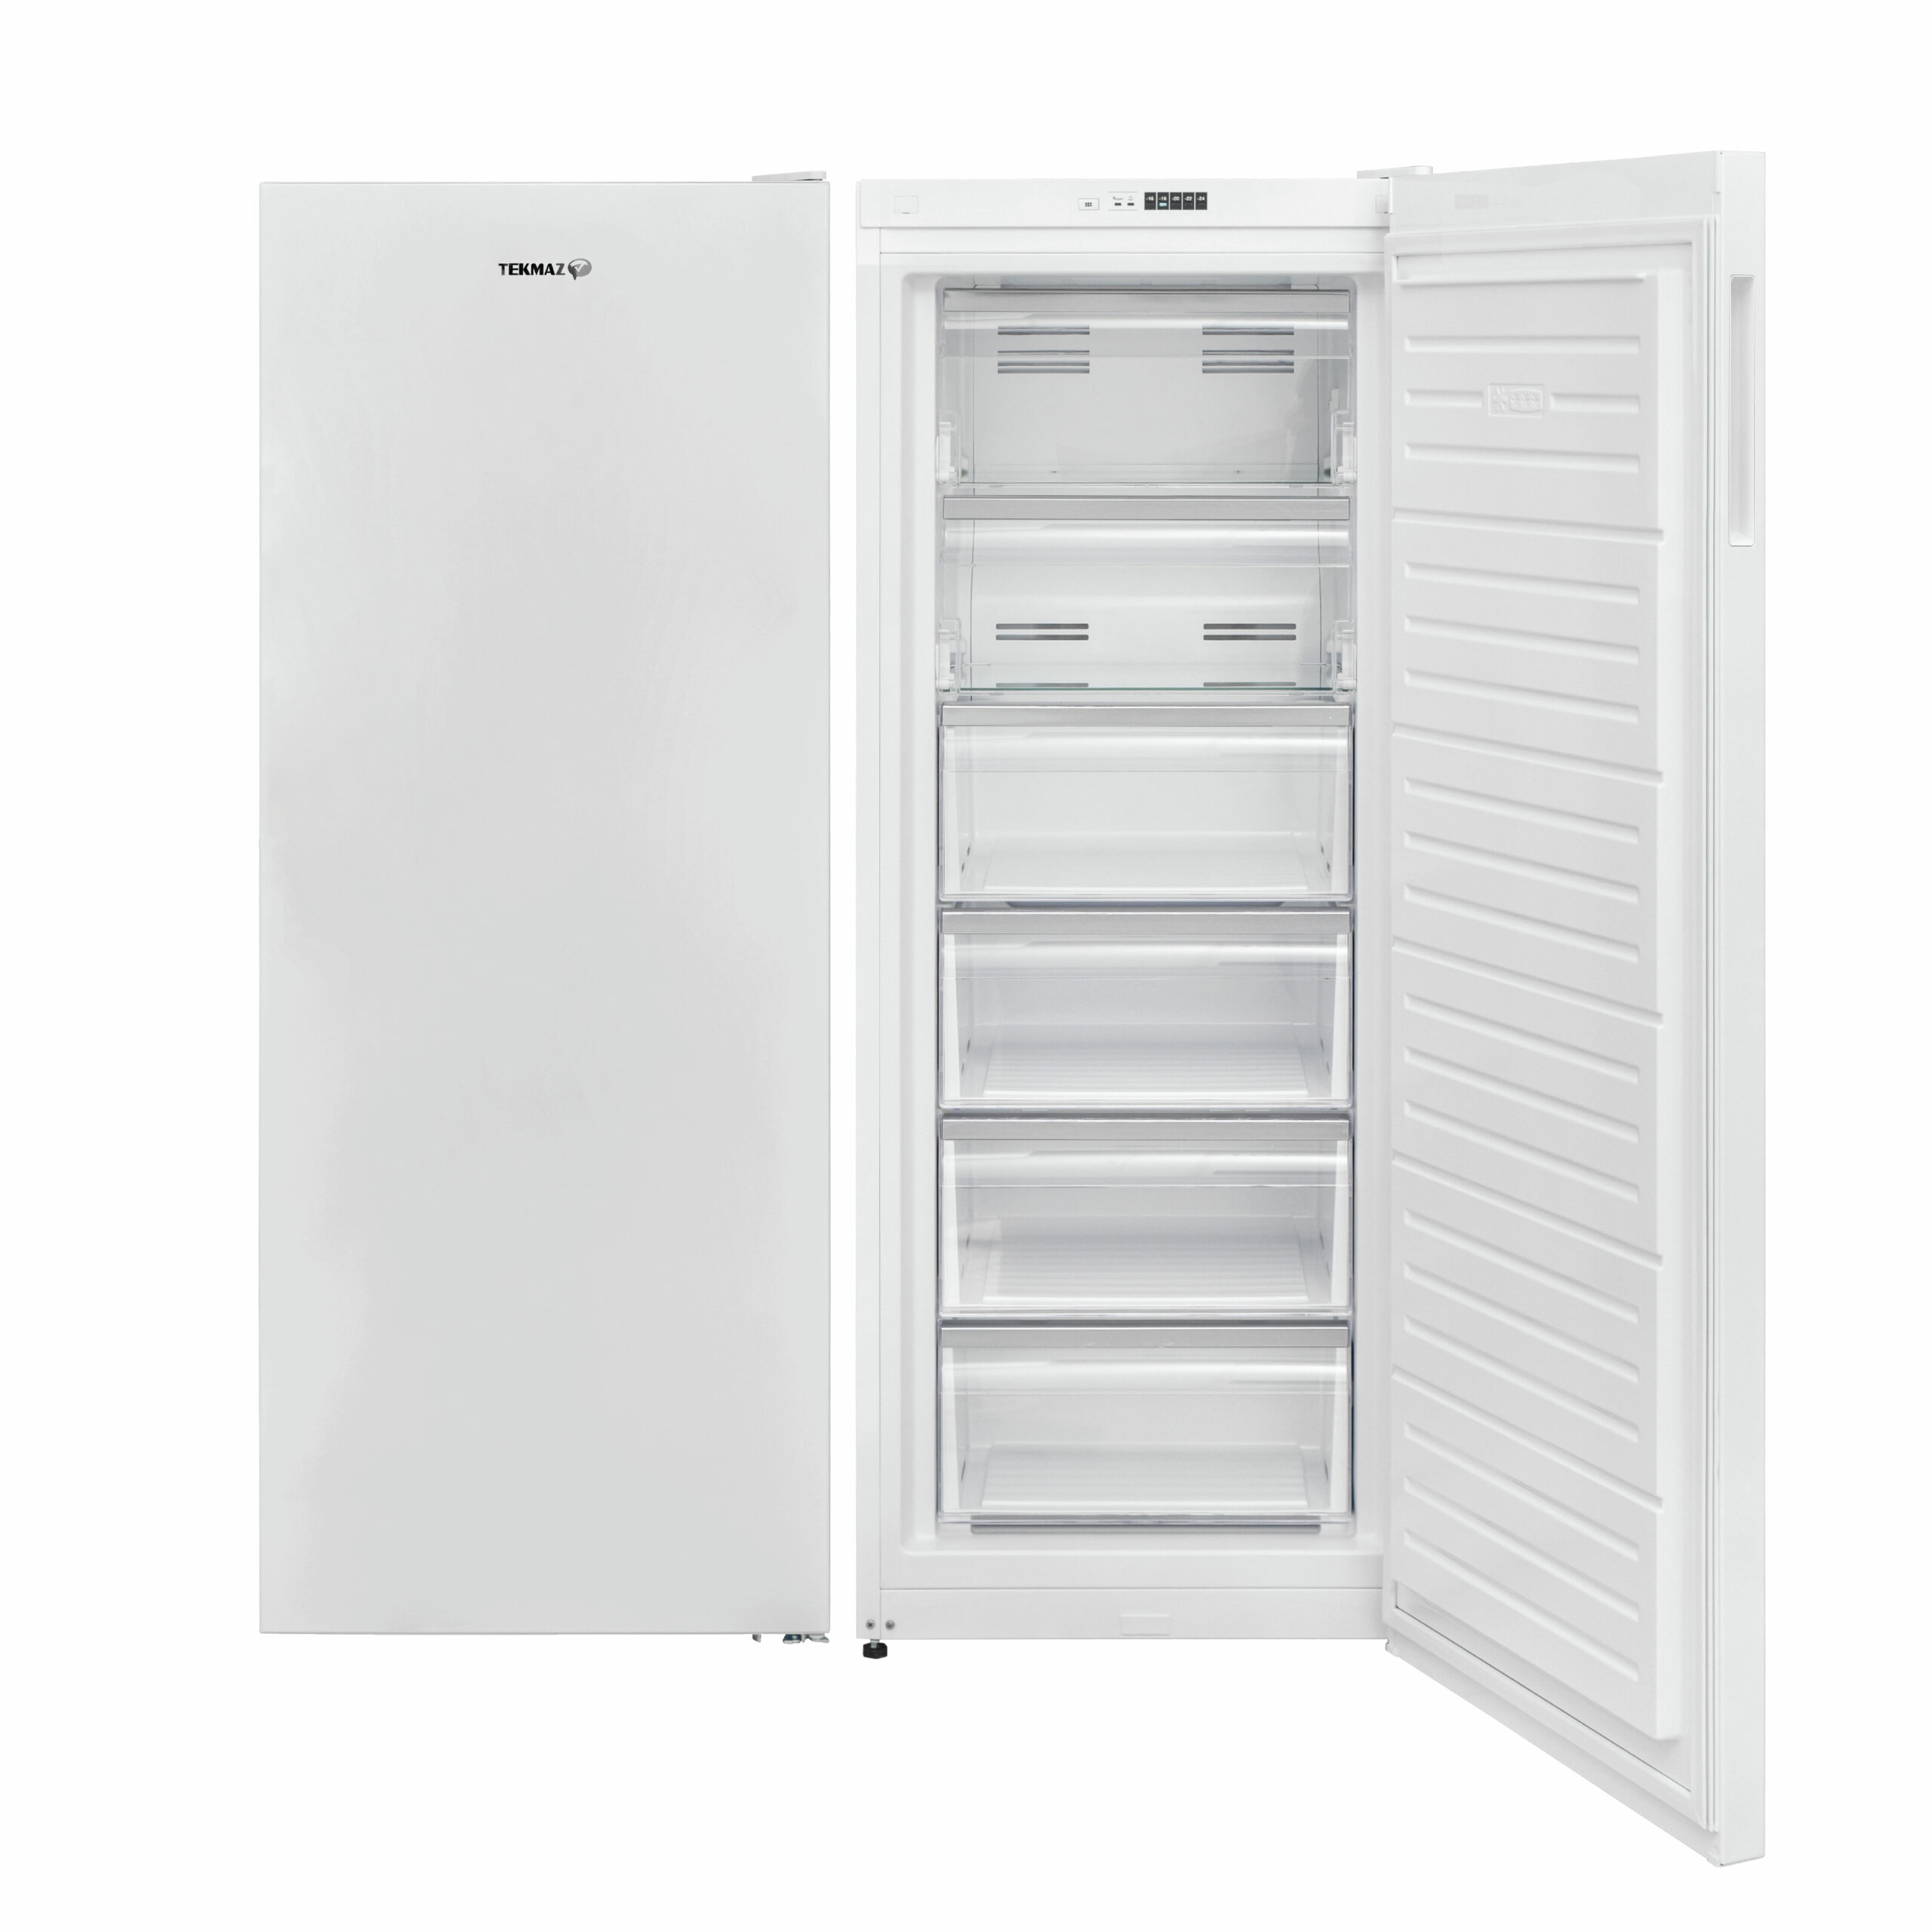 Tekmaz 6-drawer upright freezer, white